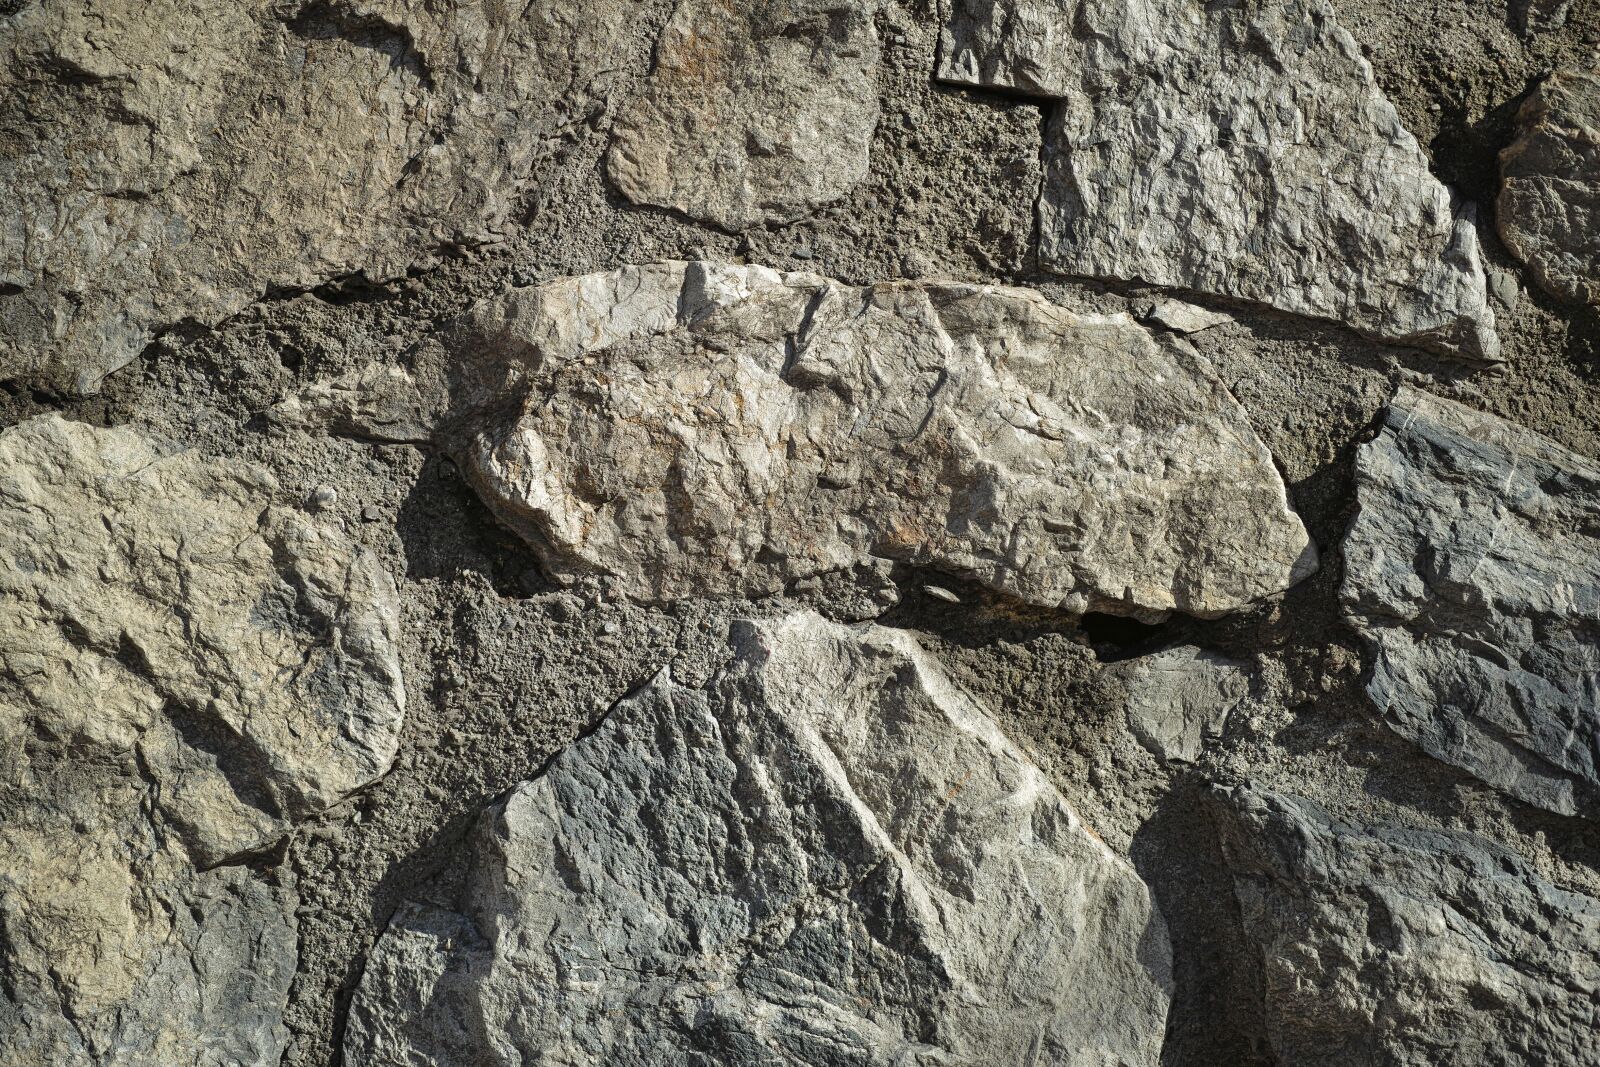 Sigma DP3 Merrill sample photo. Stone, wall, concrete photography